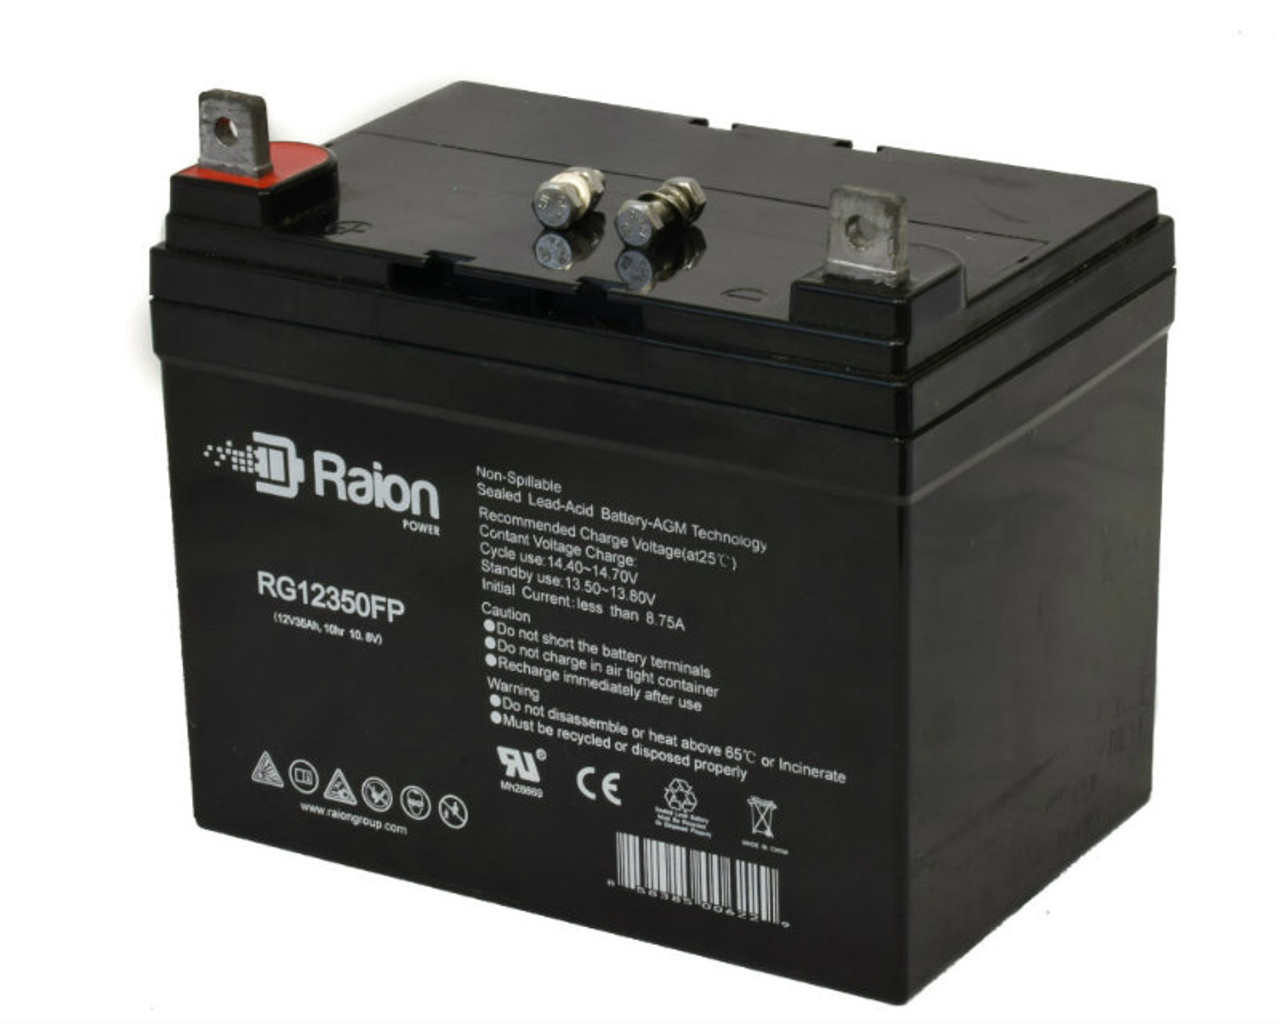 Raion Power Replacement 12V 35Ah RG12350FP Battery for Husqvarna GTH 2248 XP